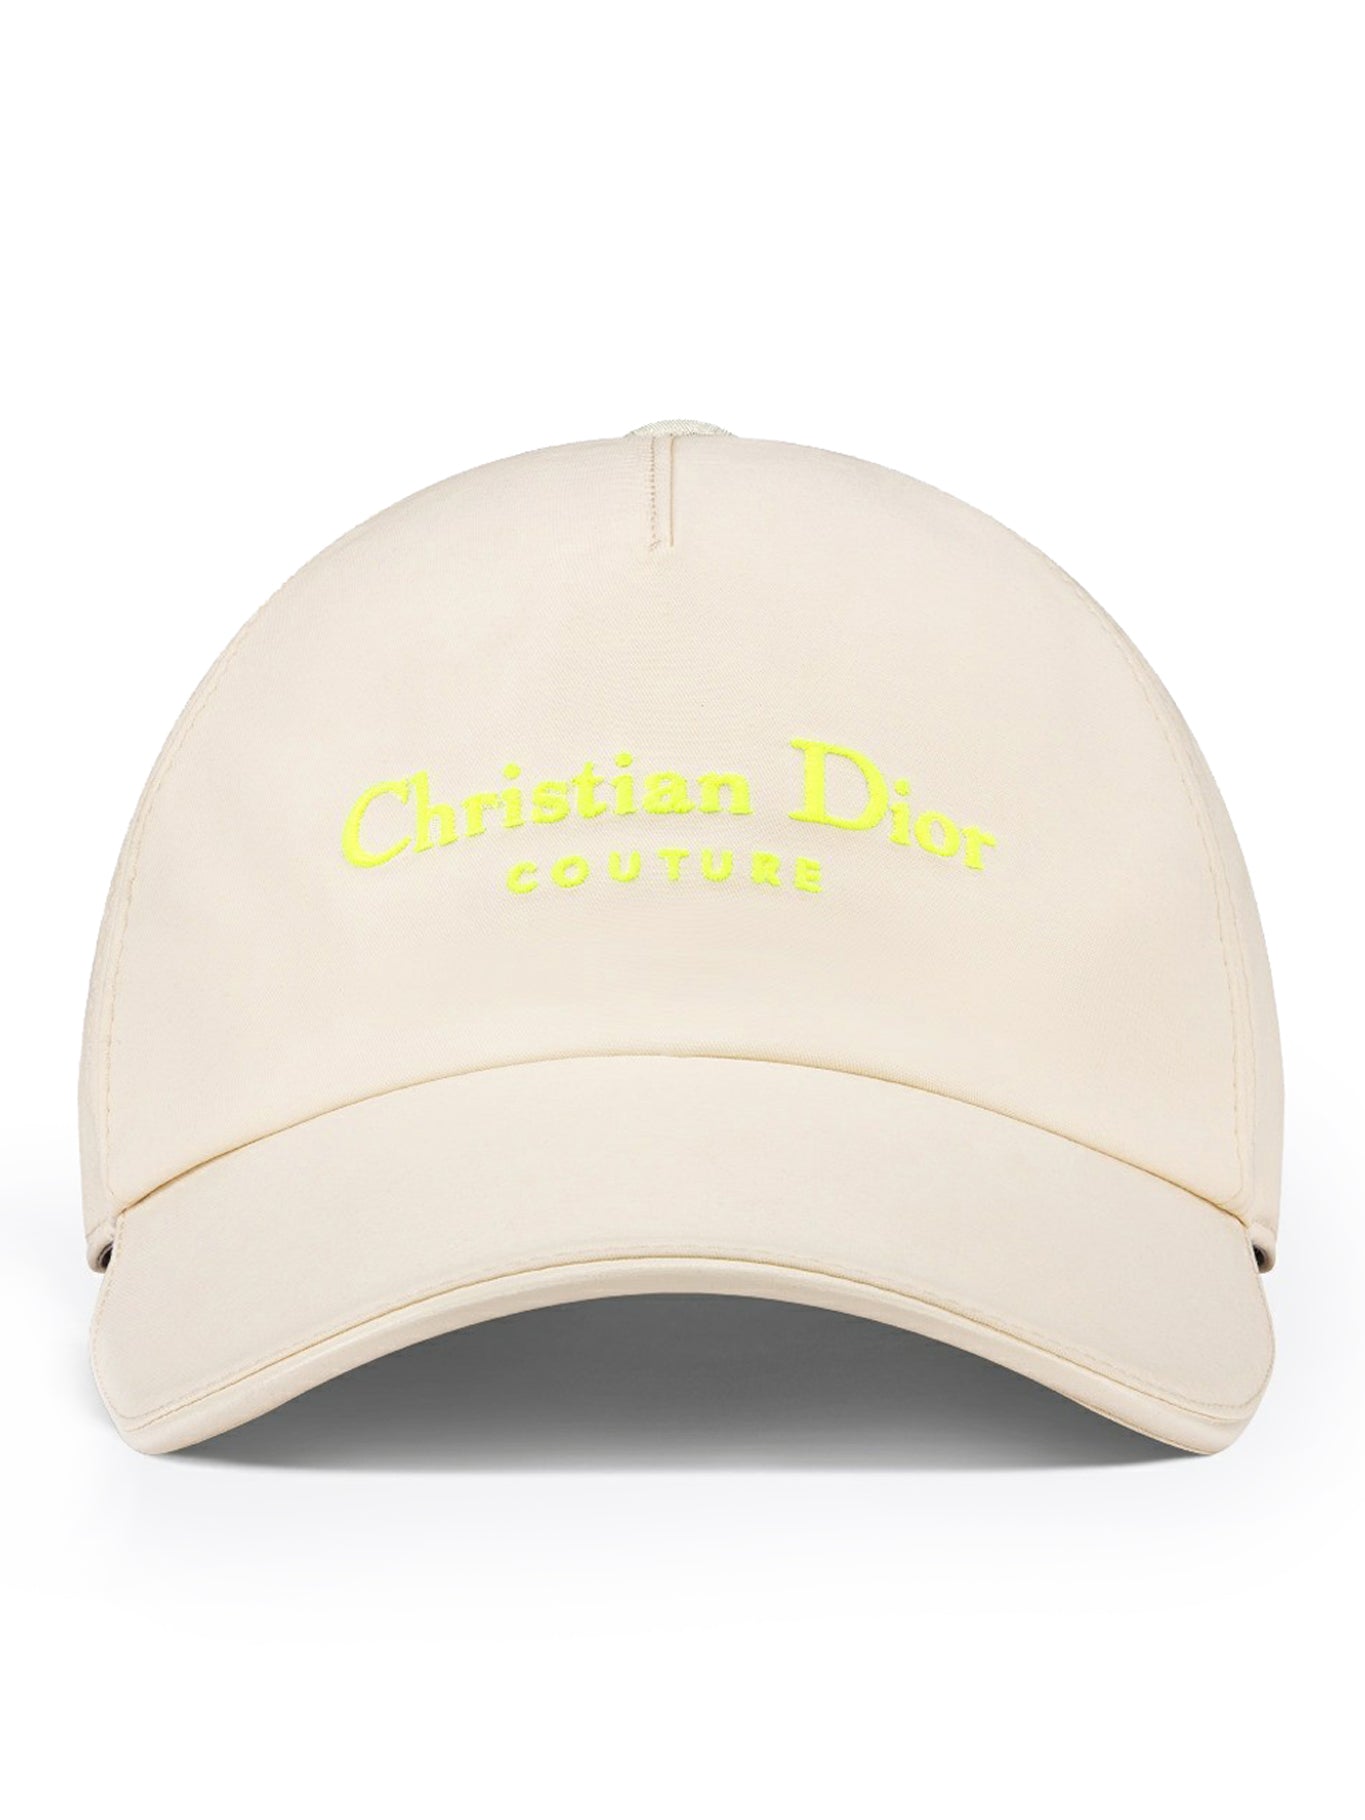 Christian Dior Couture cap